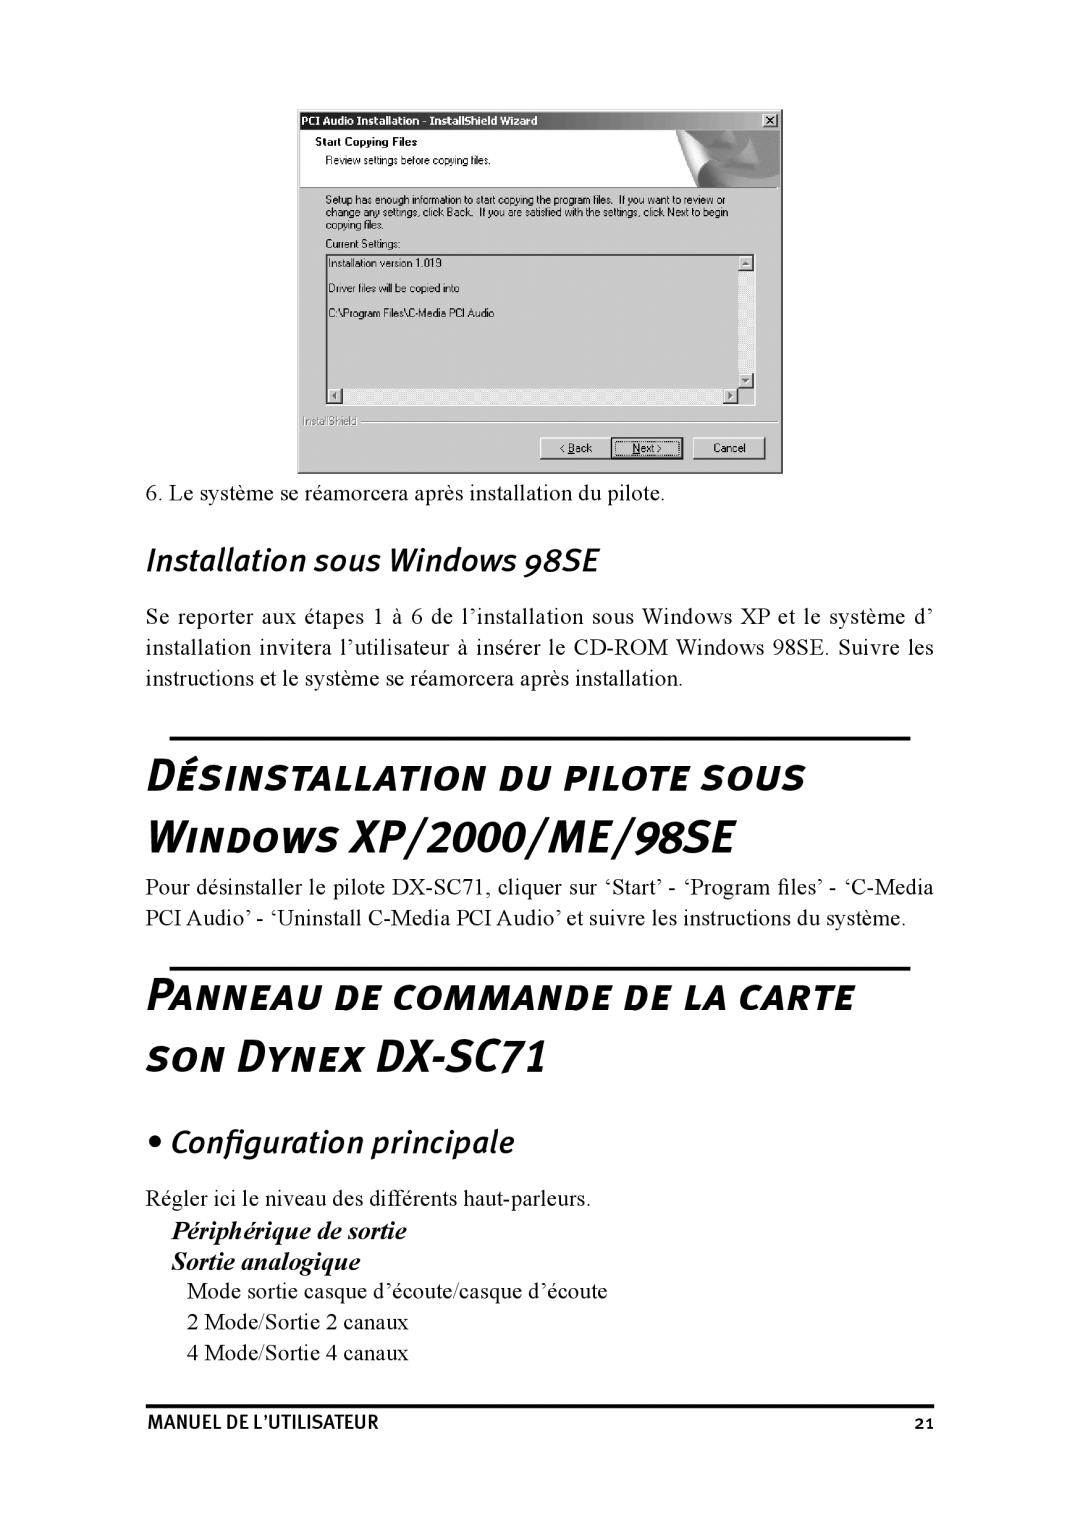 Dynex user manual SON Dynex DX-SC71, Installation sous Windows 98SE, Configuration principale 